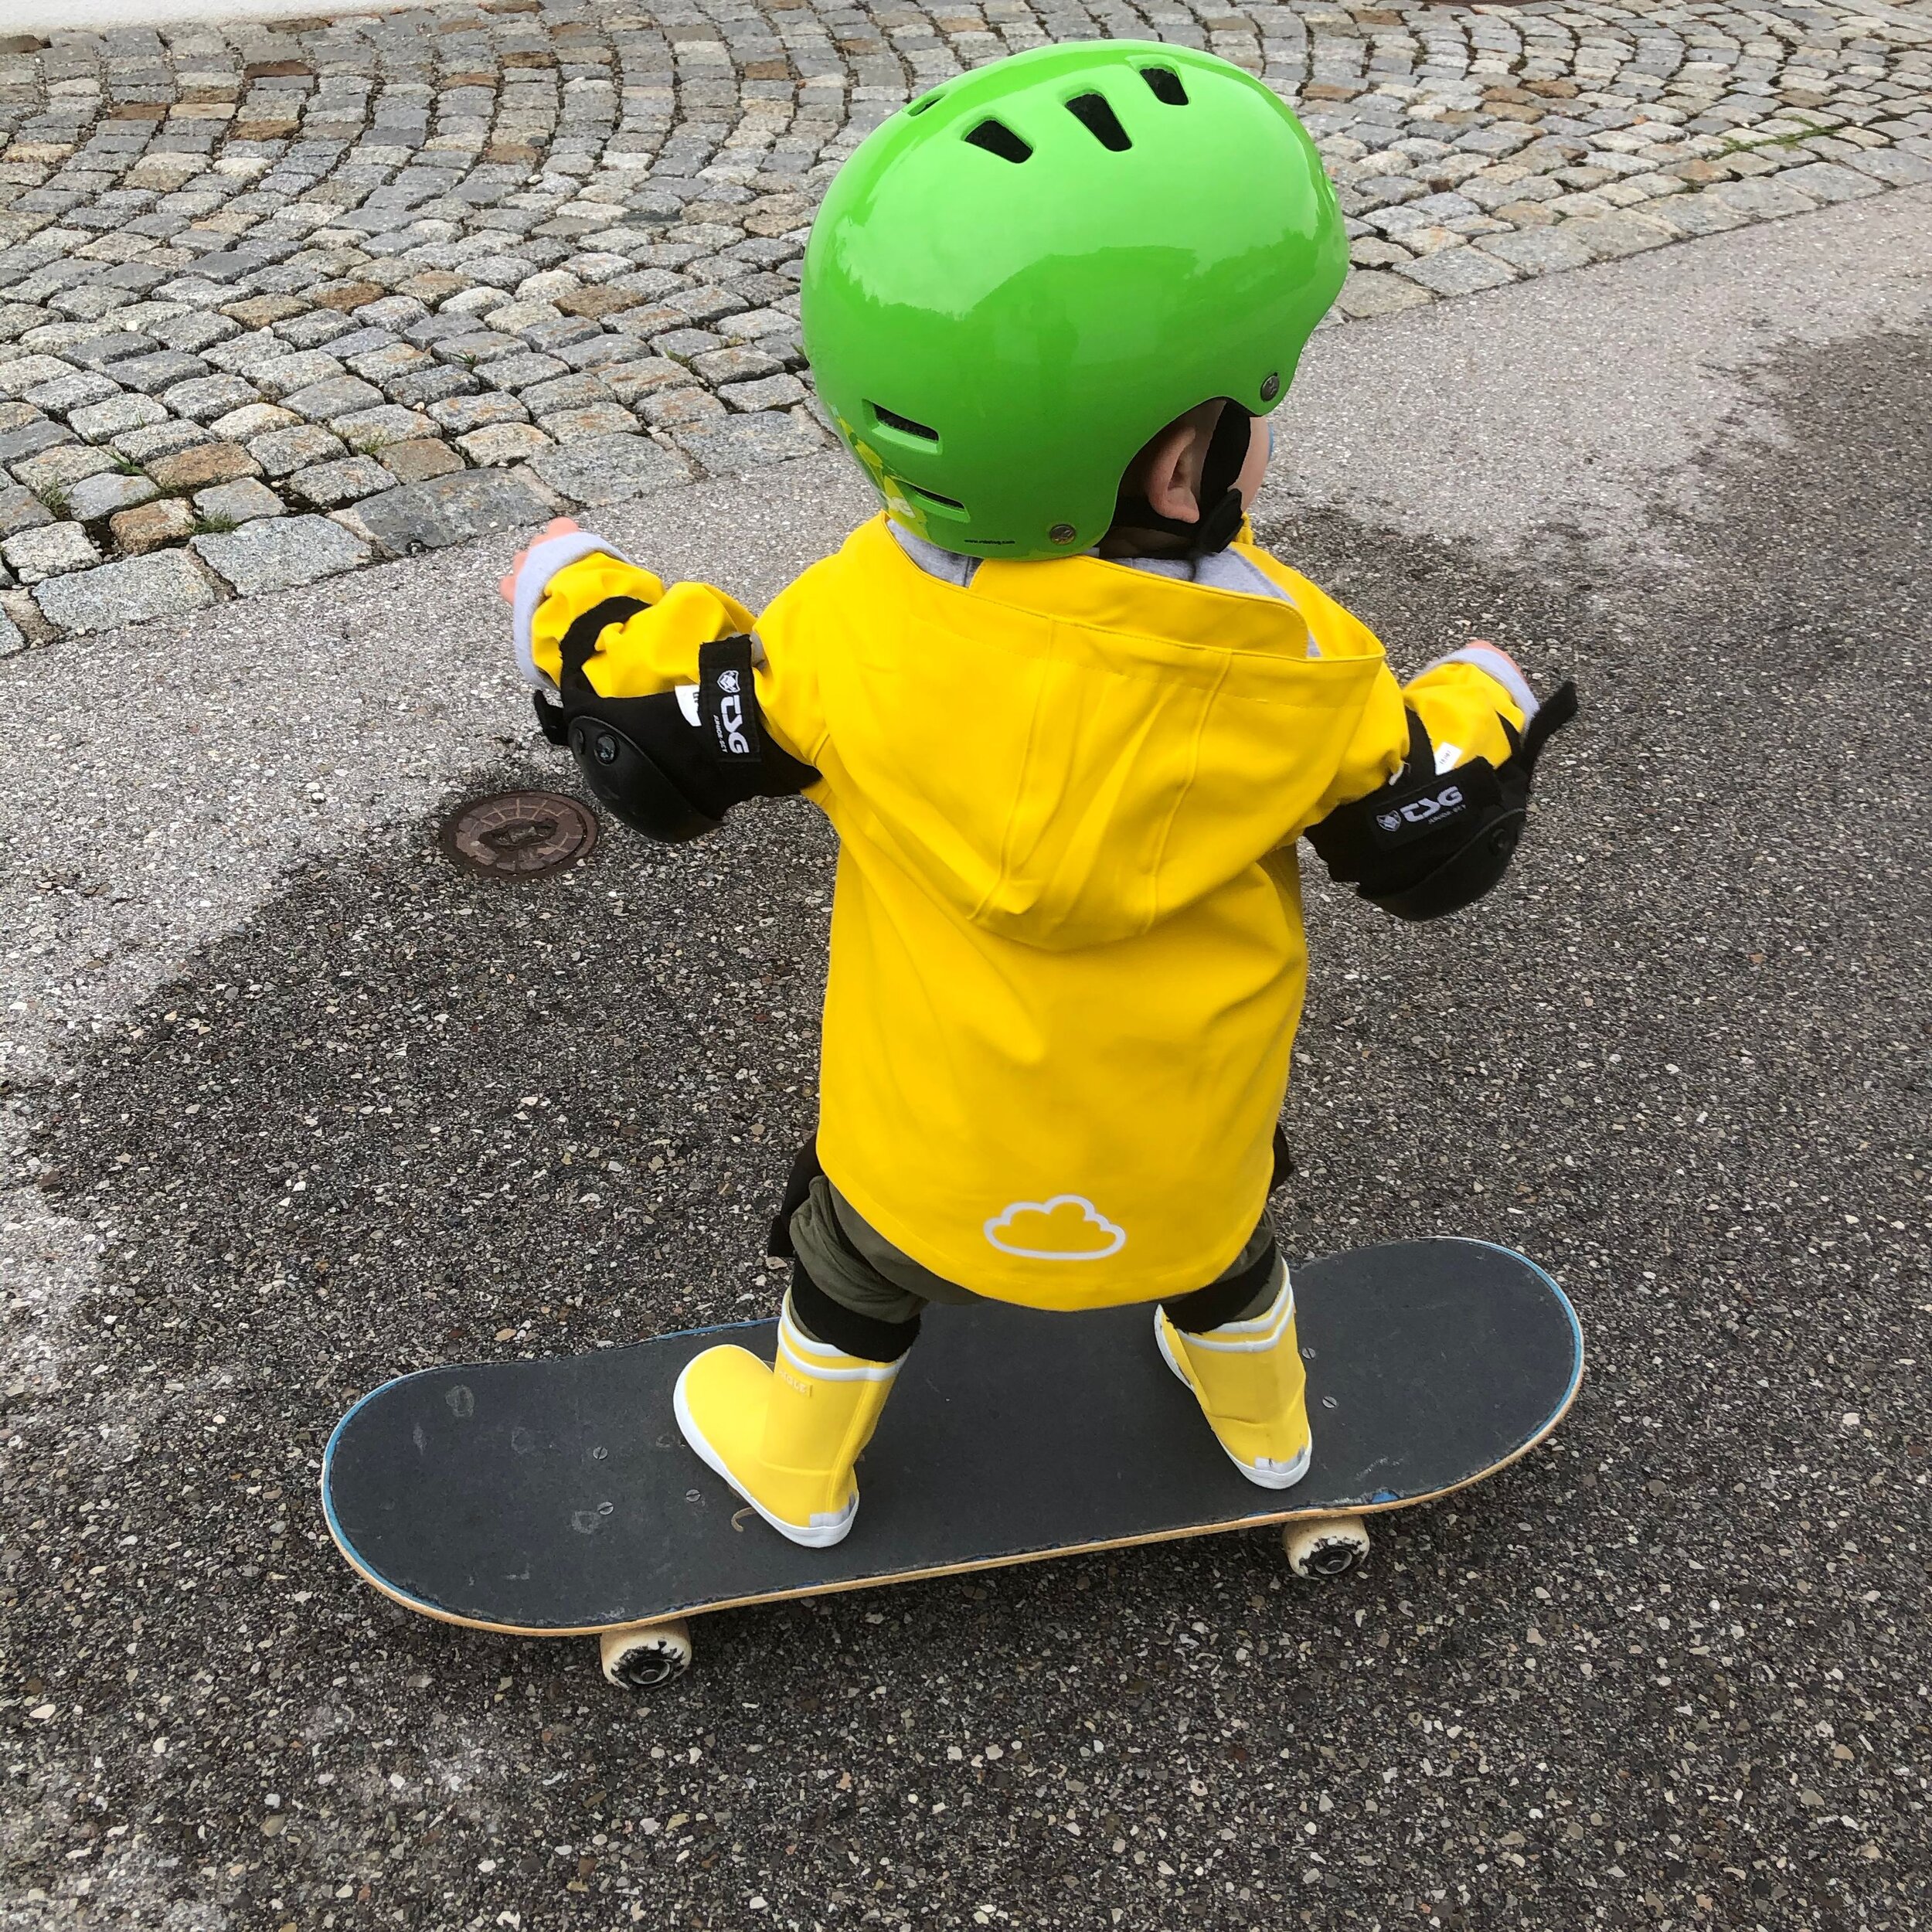 Skateboard Boy Learn to Skate Instruction.jpg